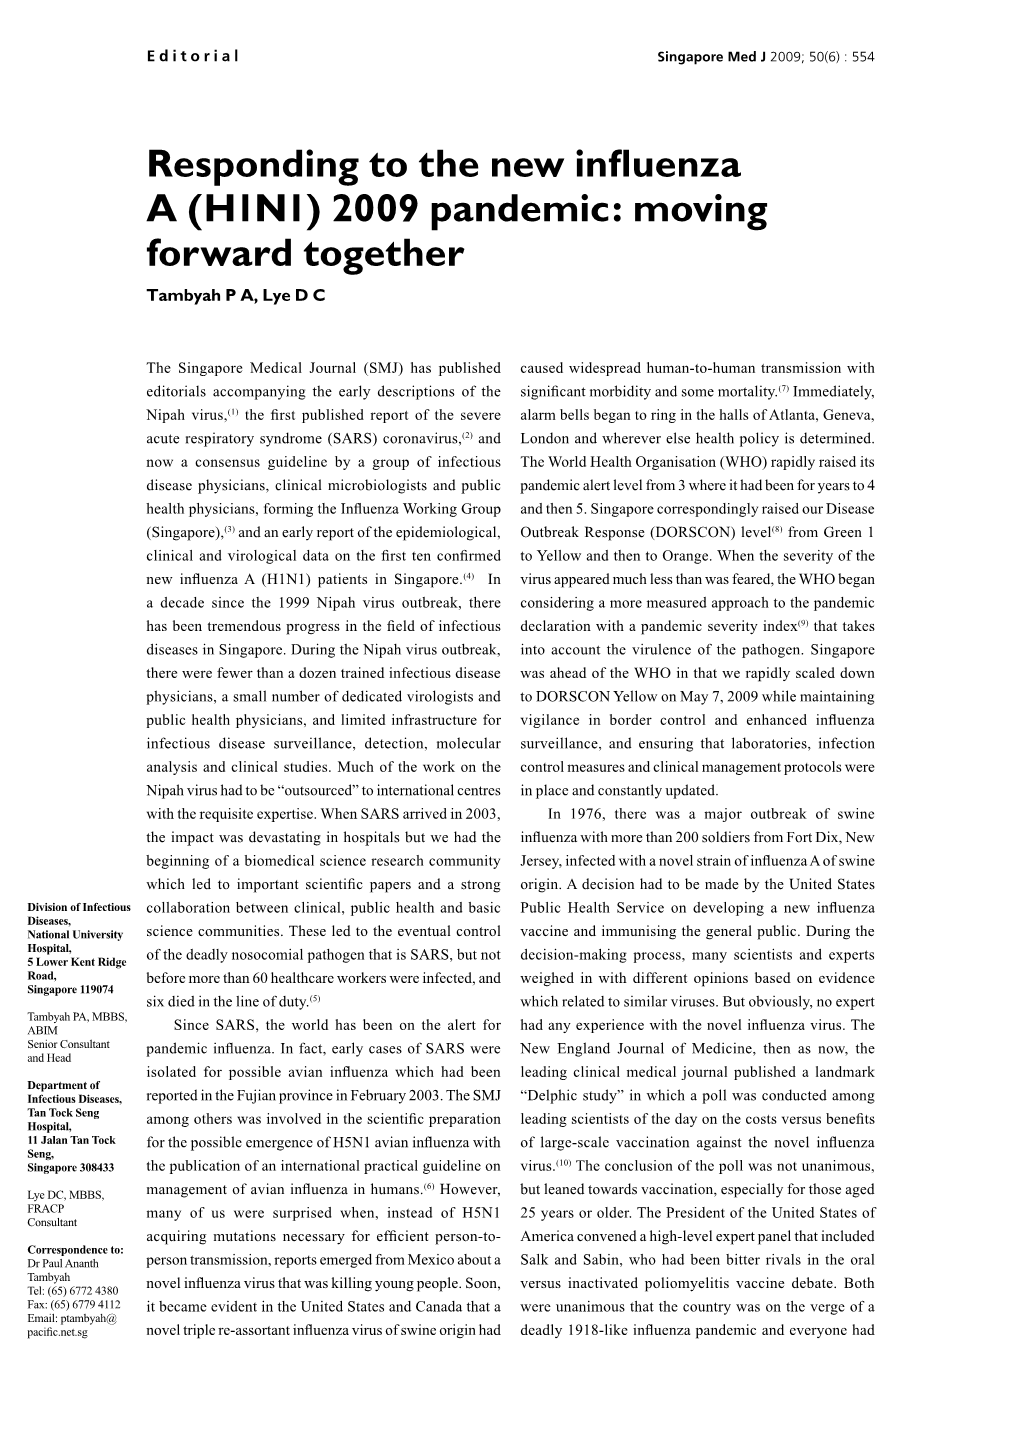 (H1N1) 2009 Pandemic: Moving Forward Together Tambyah P A, Lye D C